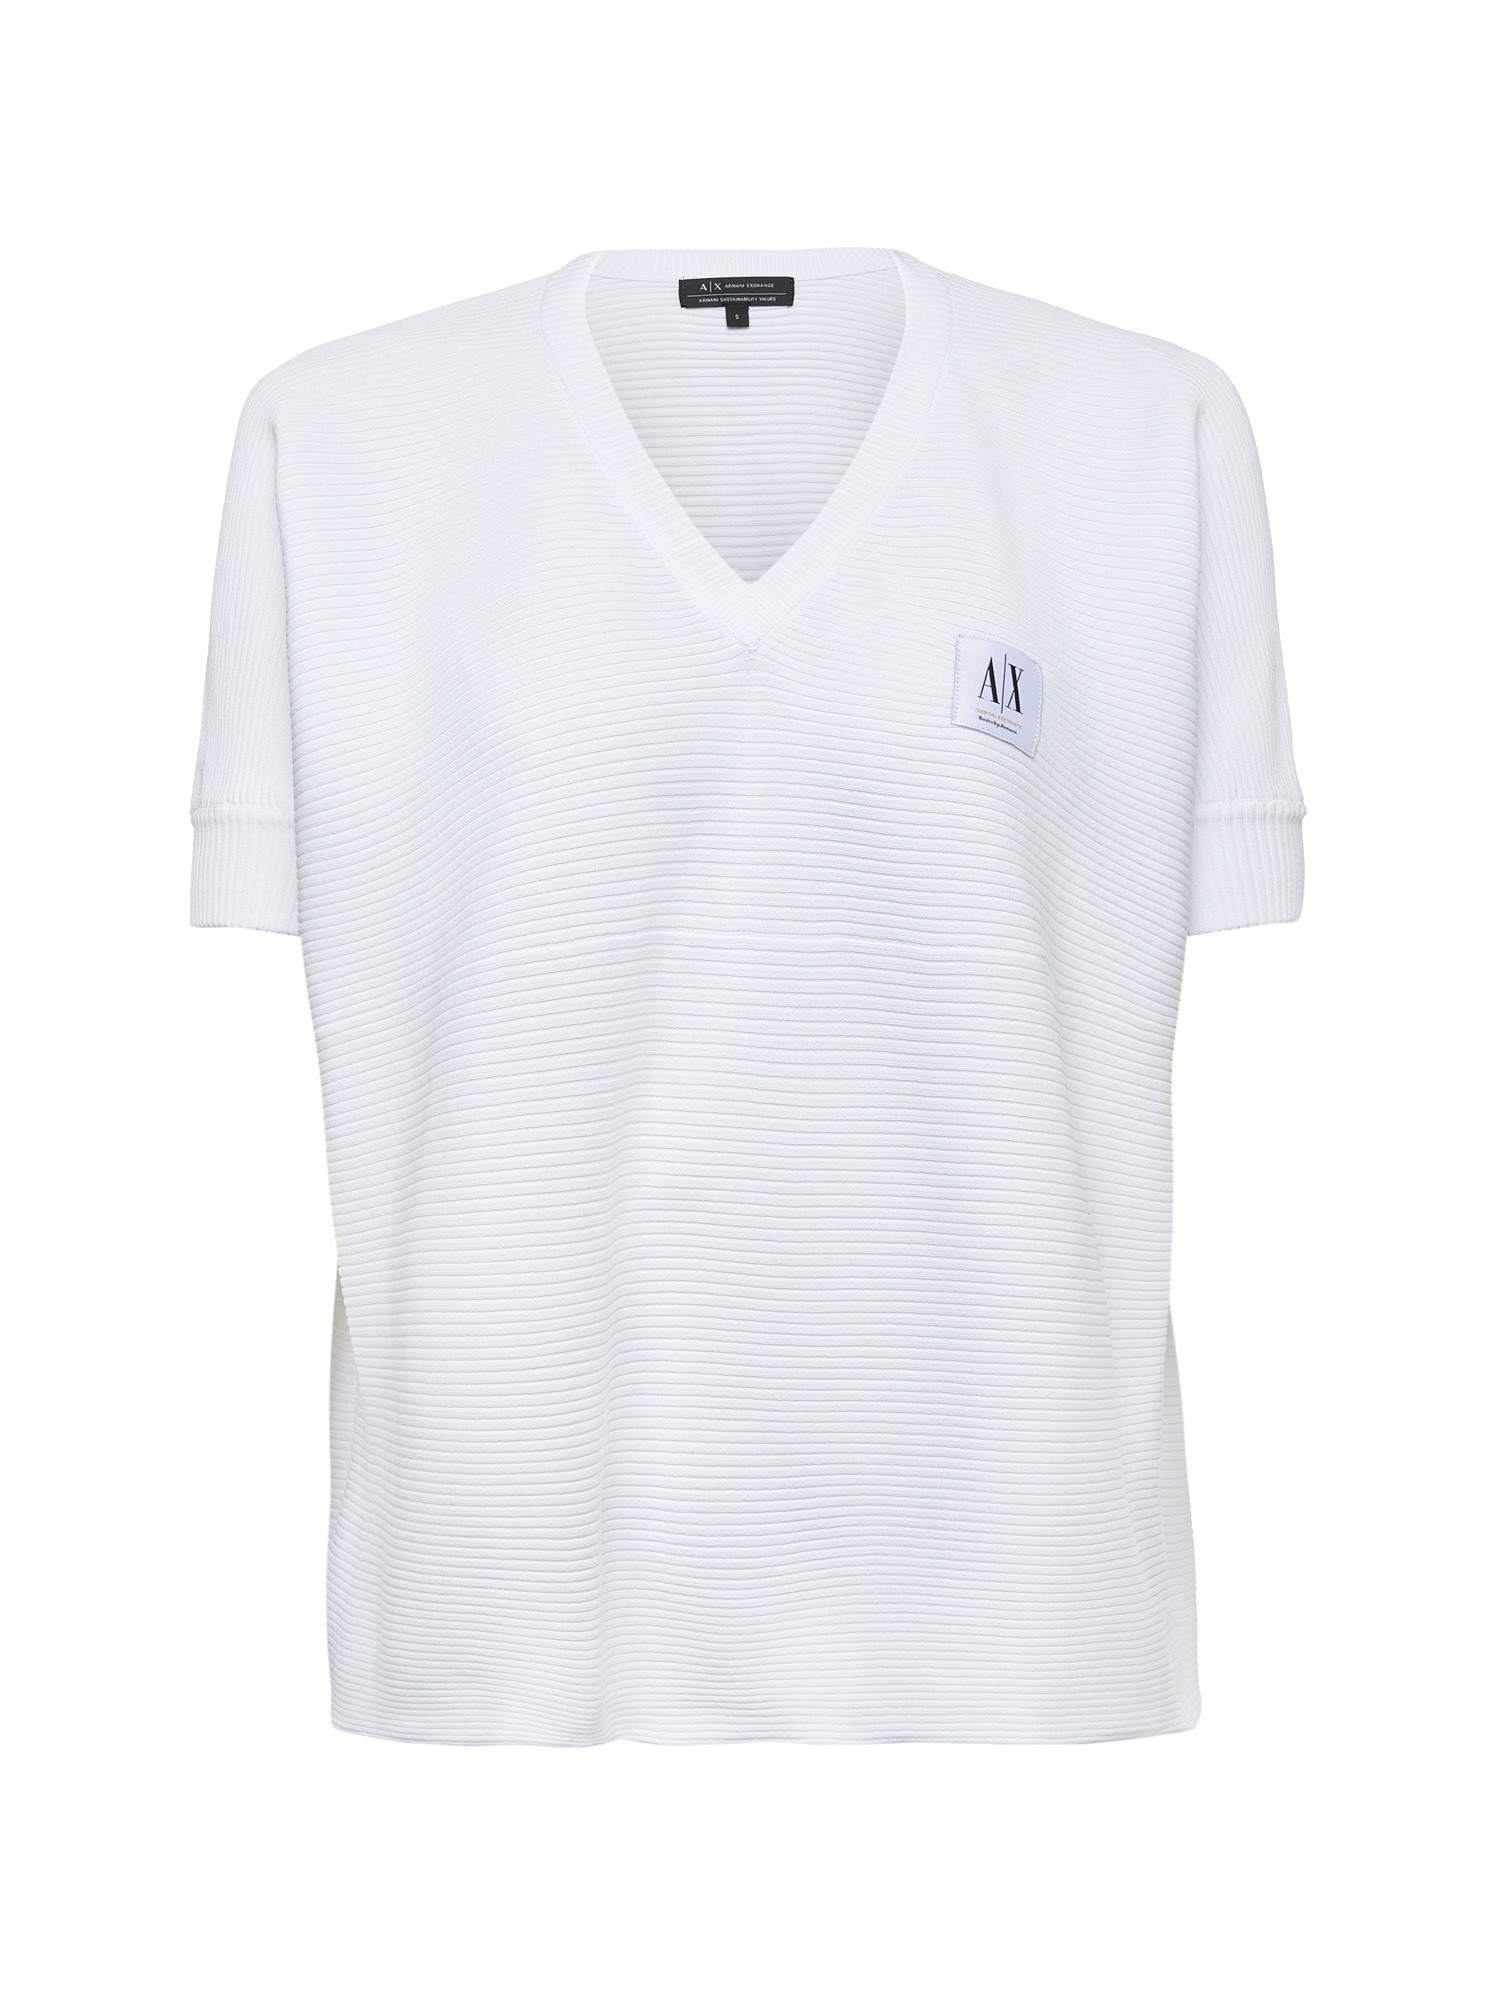 Armani Exchange - Ribbed sweater with logo, White, large image number 0